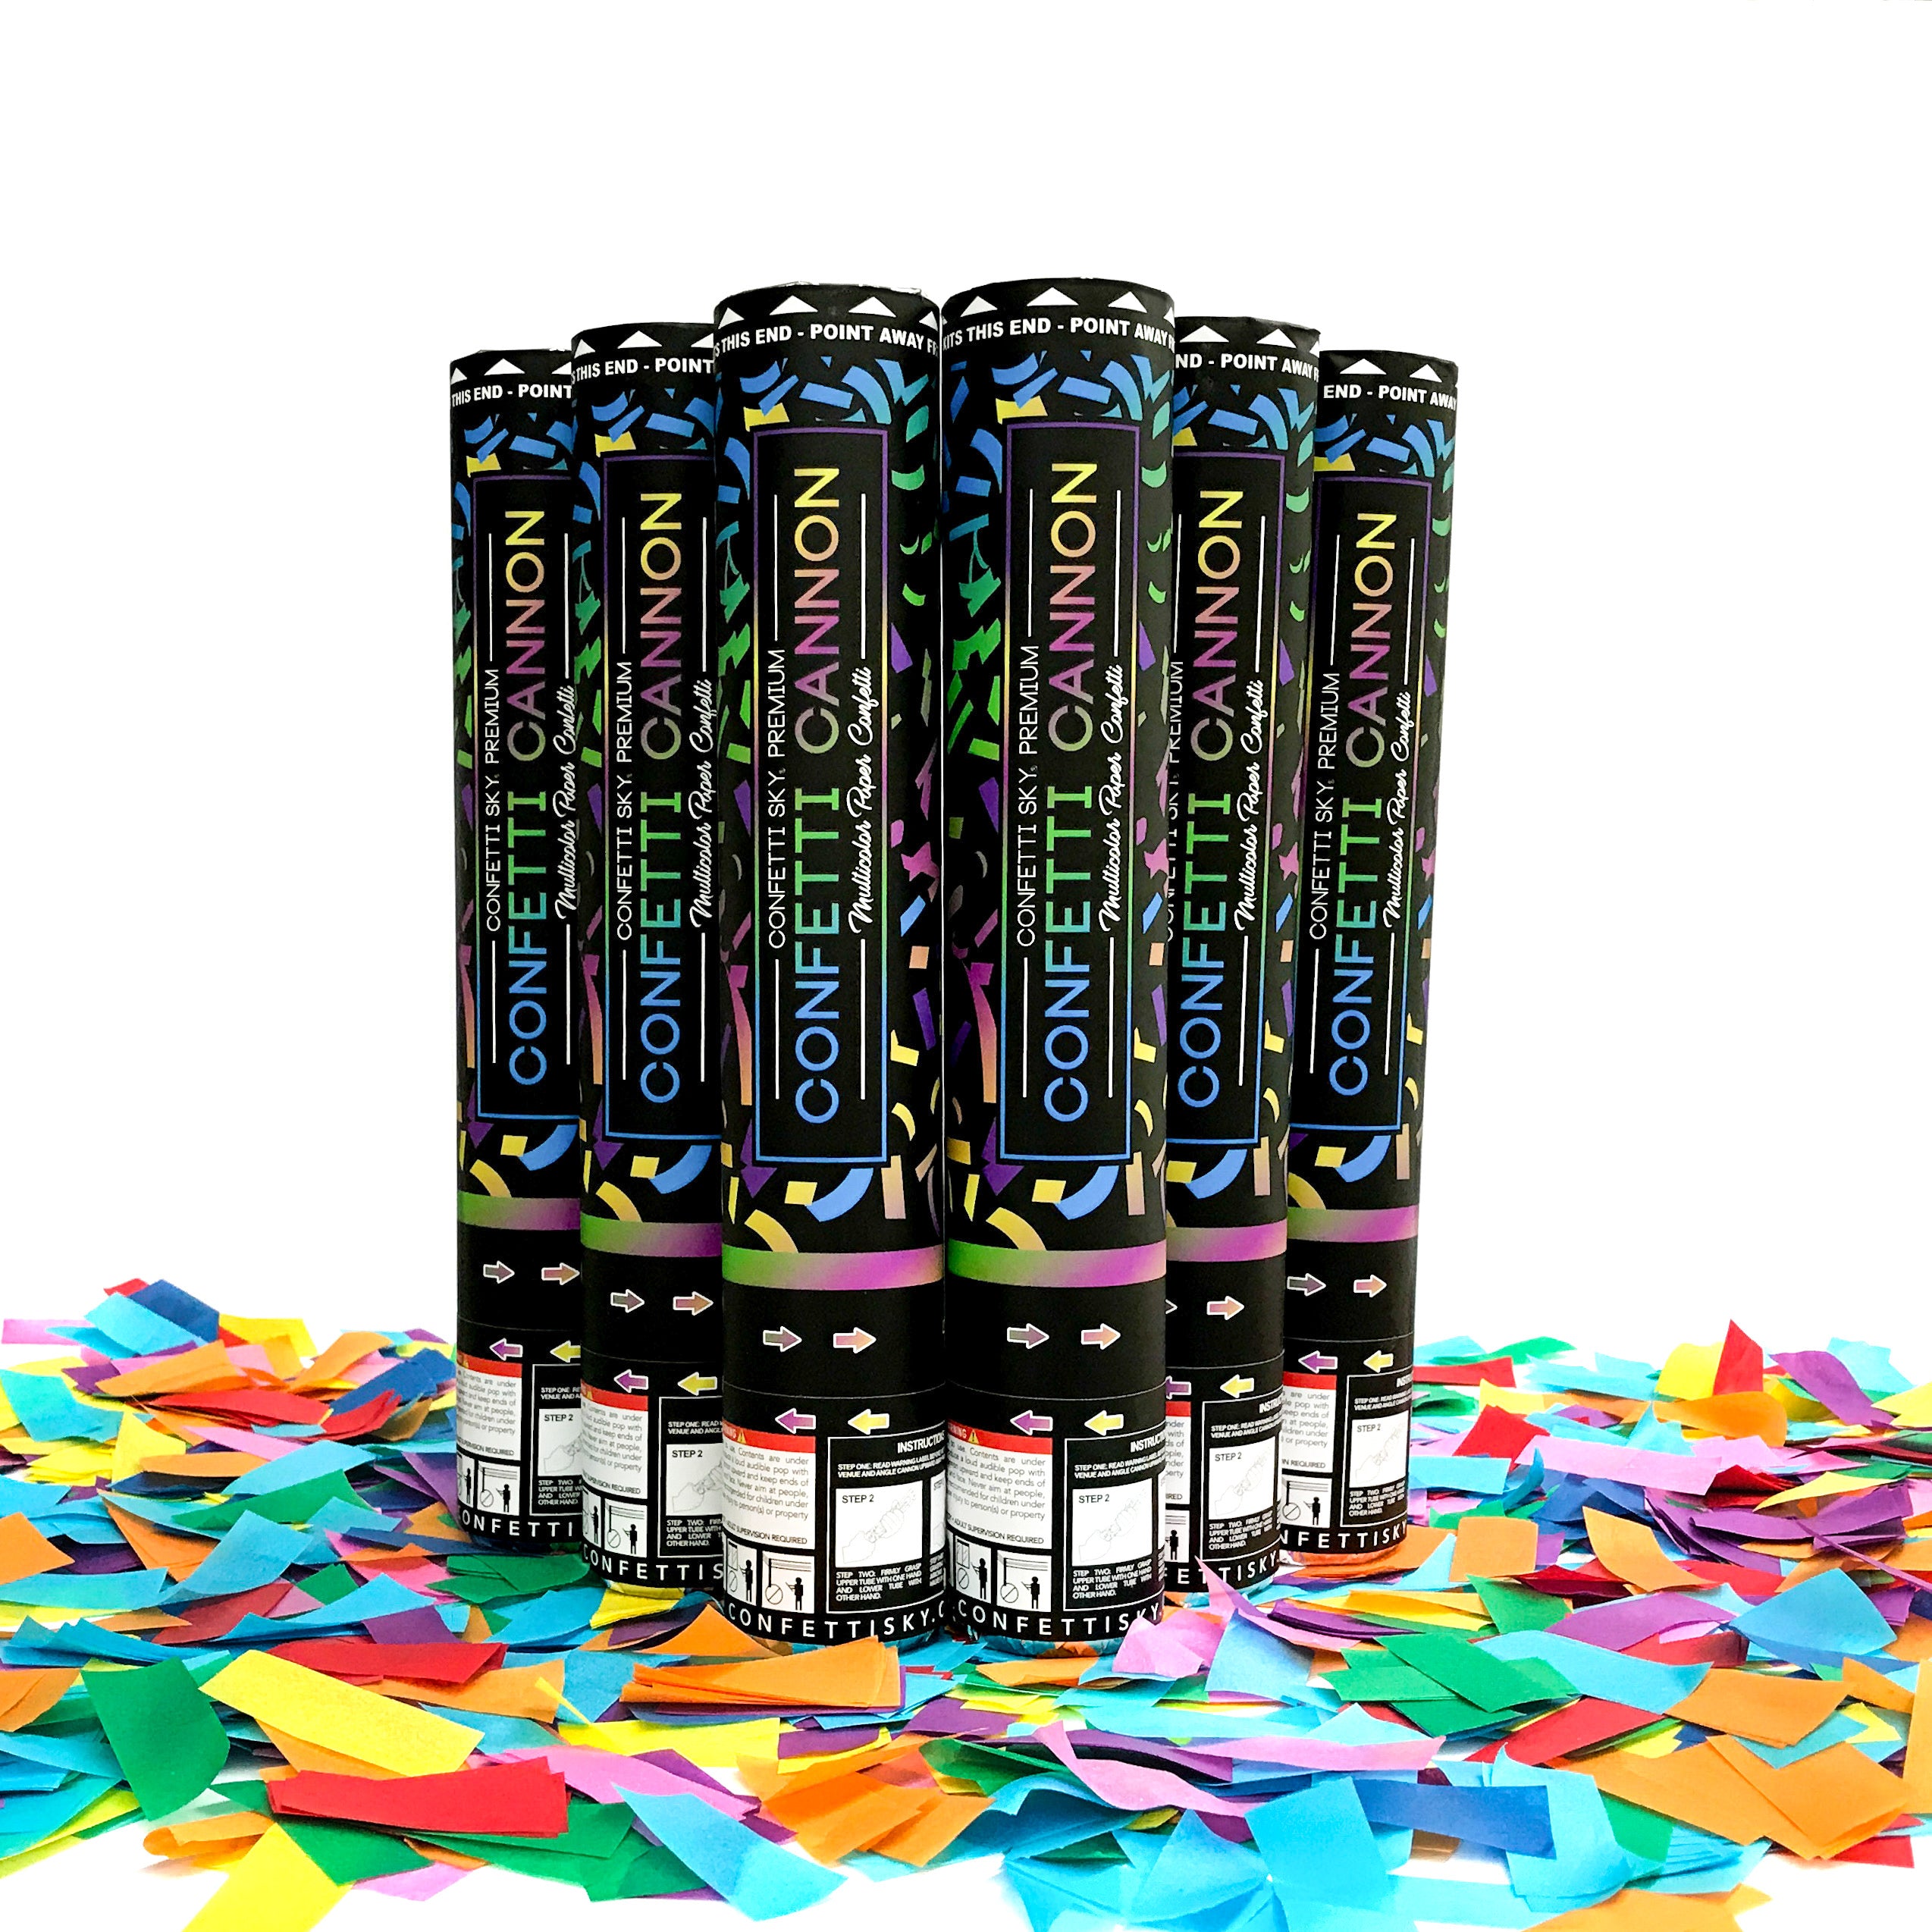 Paper Confetti bio degradable multi color special effects party event  flutter